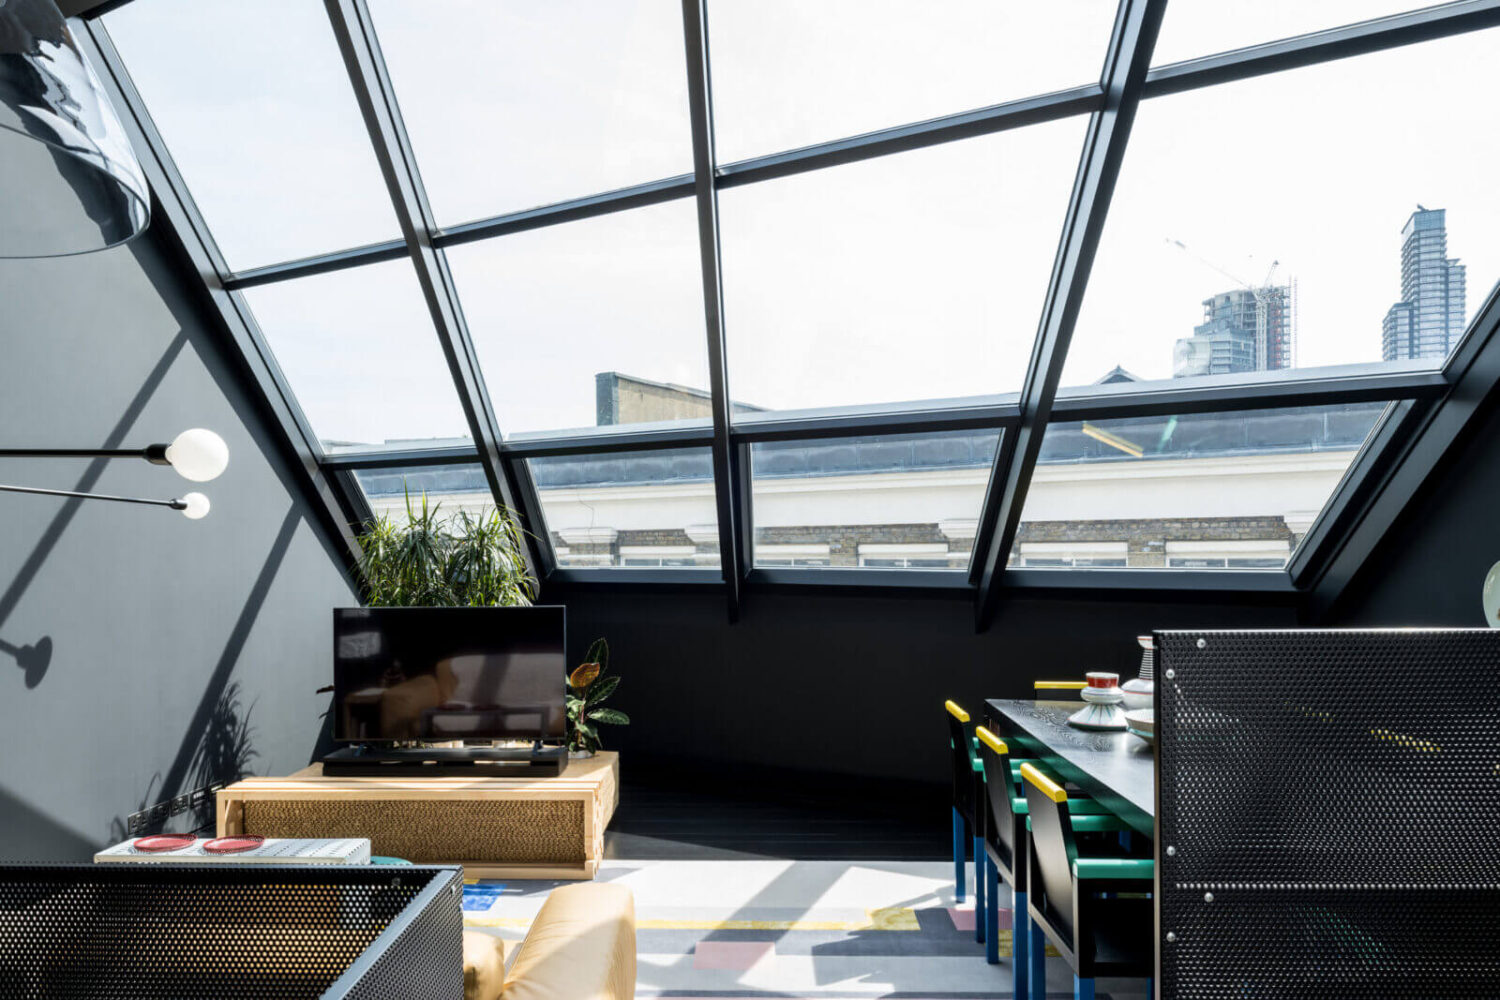 large-skylights-artist-windows-modern-loft-london-nordroom